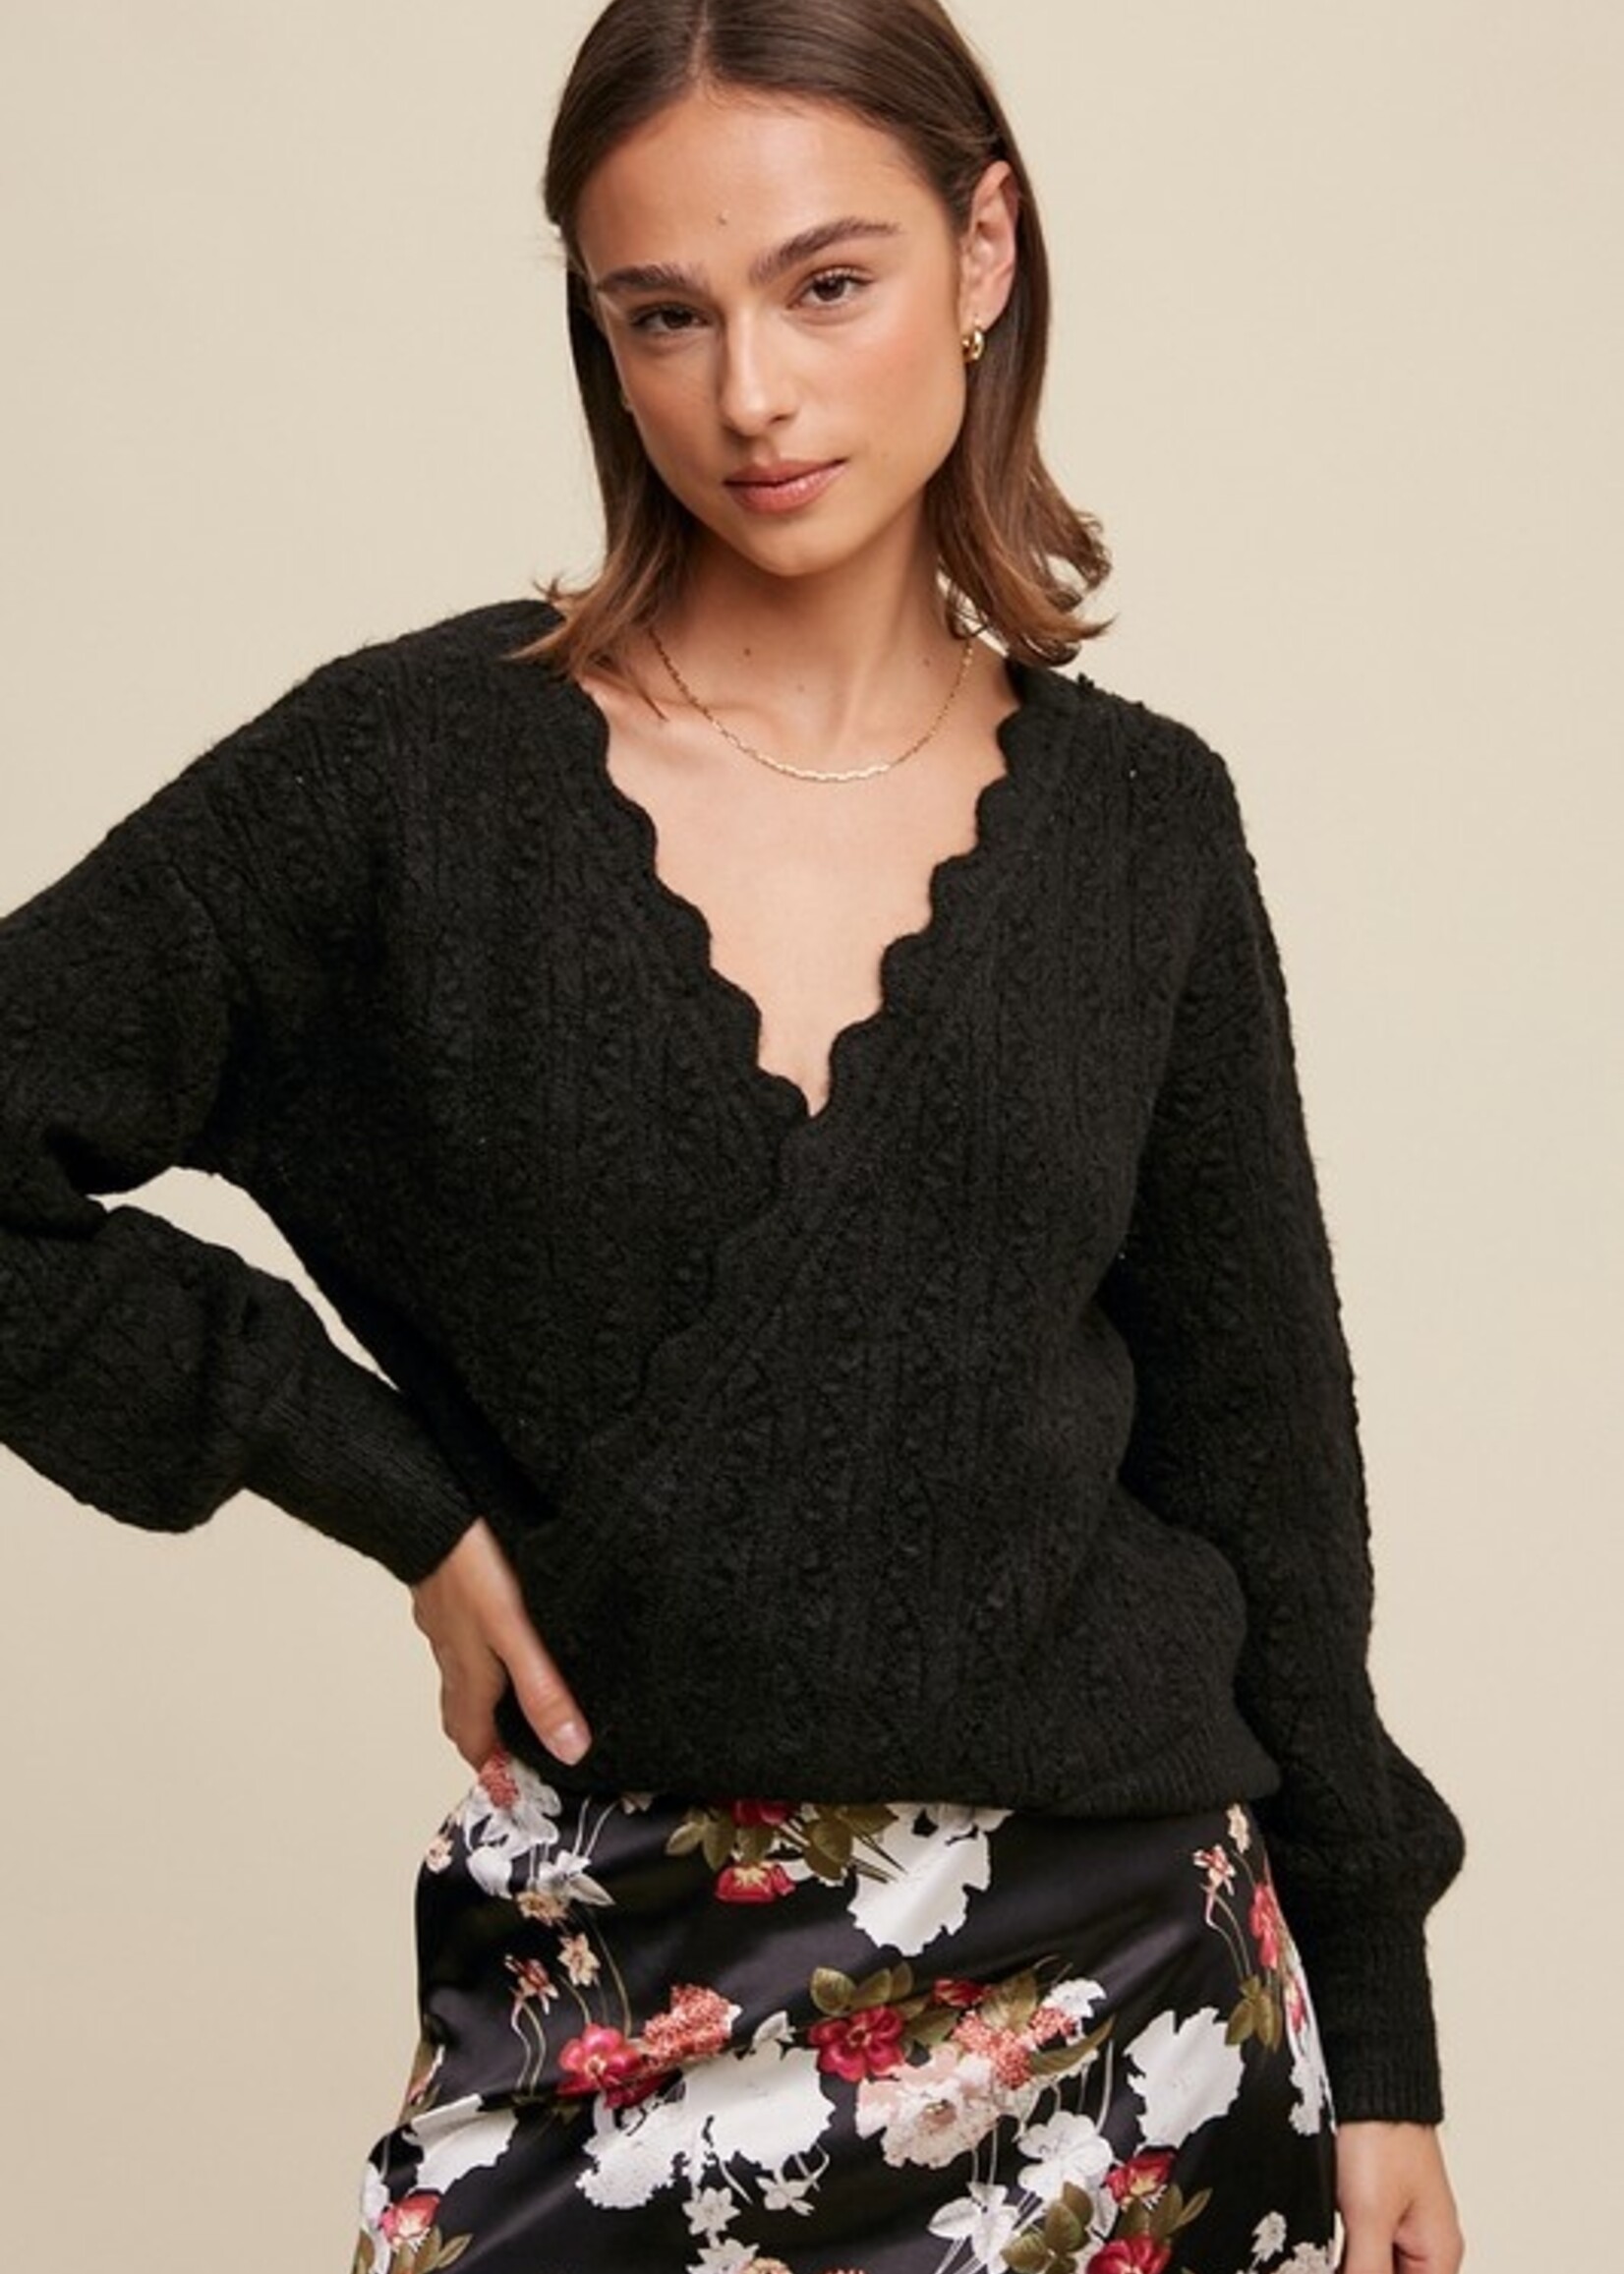 Pointelle wrap knit sweater +2 colors